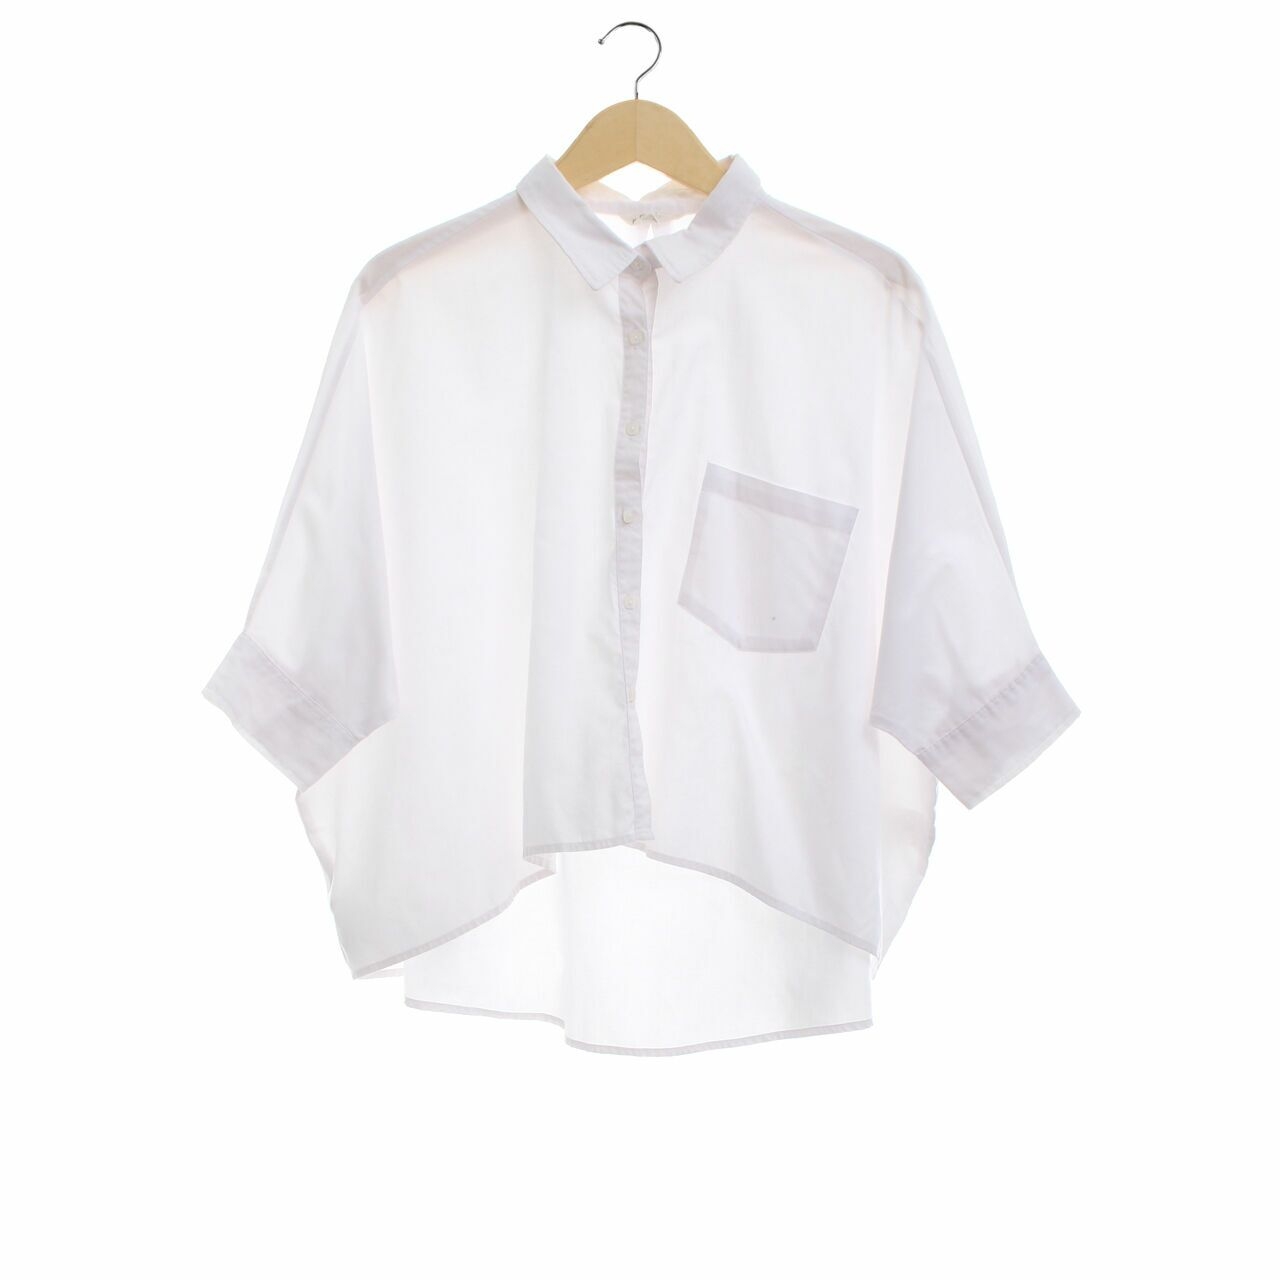 Schon Couture White Shirt210